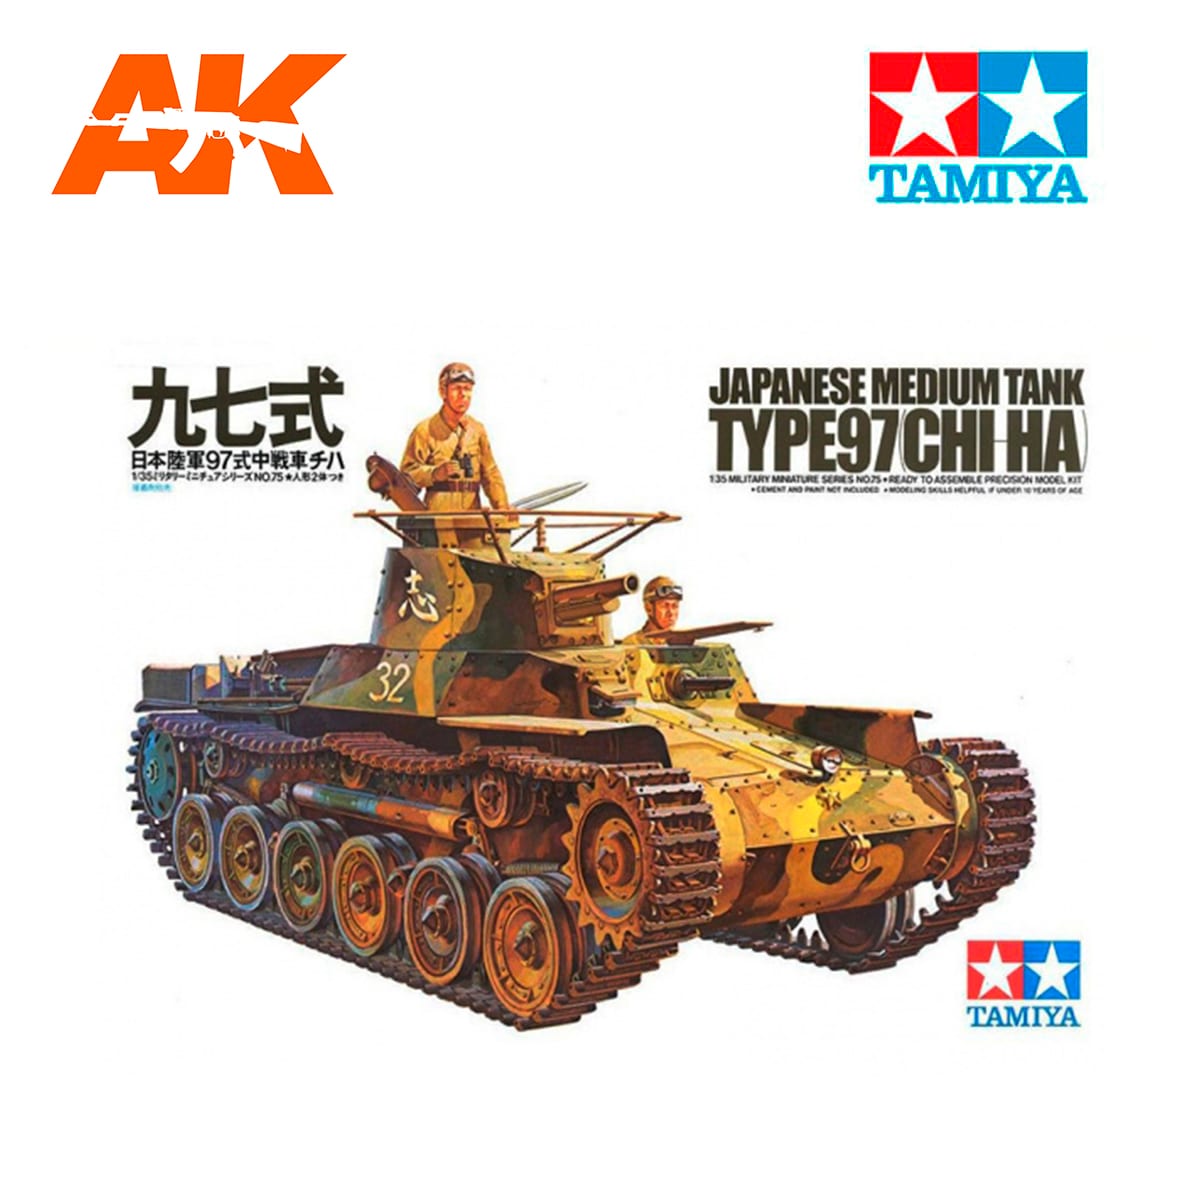 1/35 Japanese Tank Type 97 Chi Ha